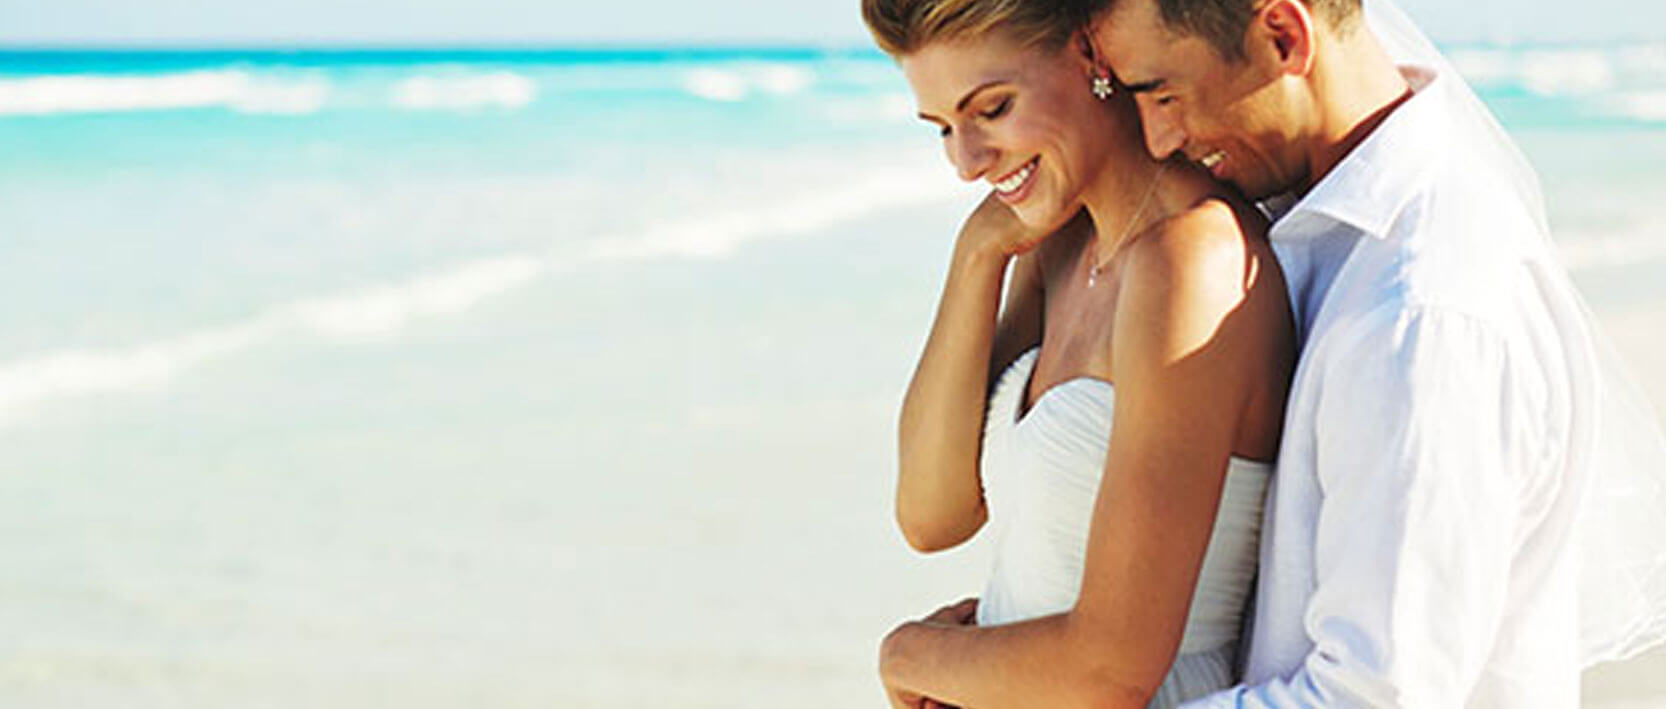 Hyatt Ziva Cancun Spa - Intimate Elegance Wedding Package